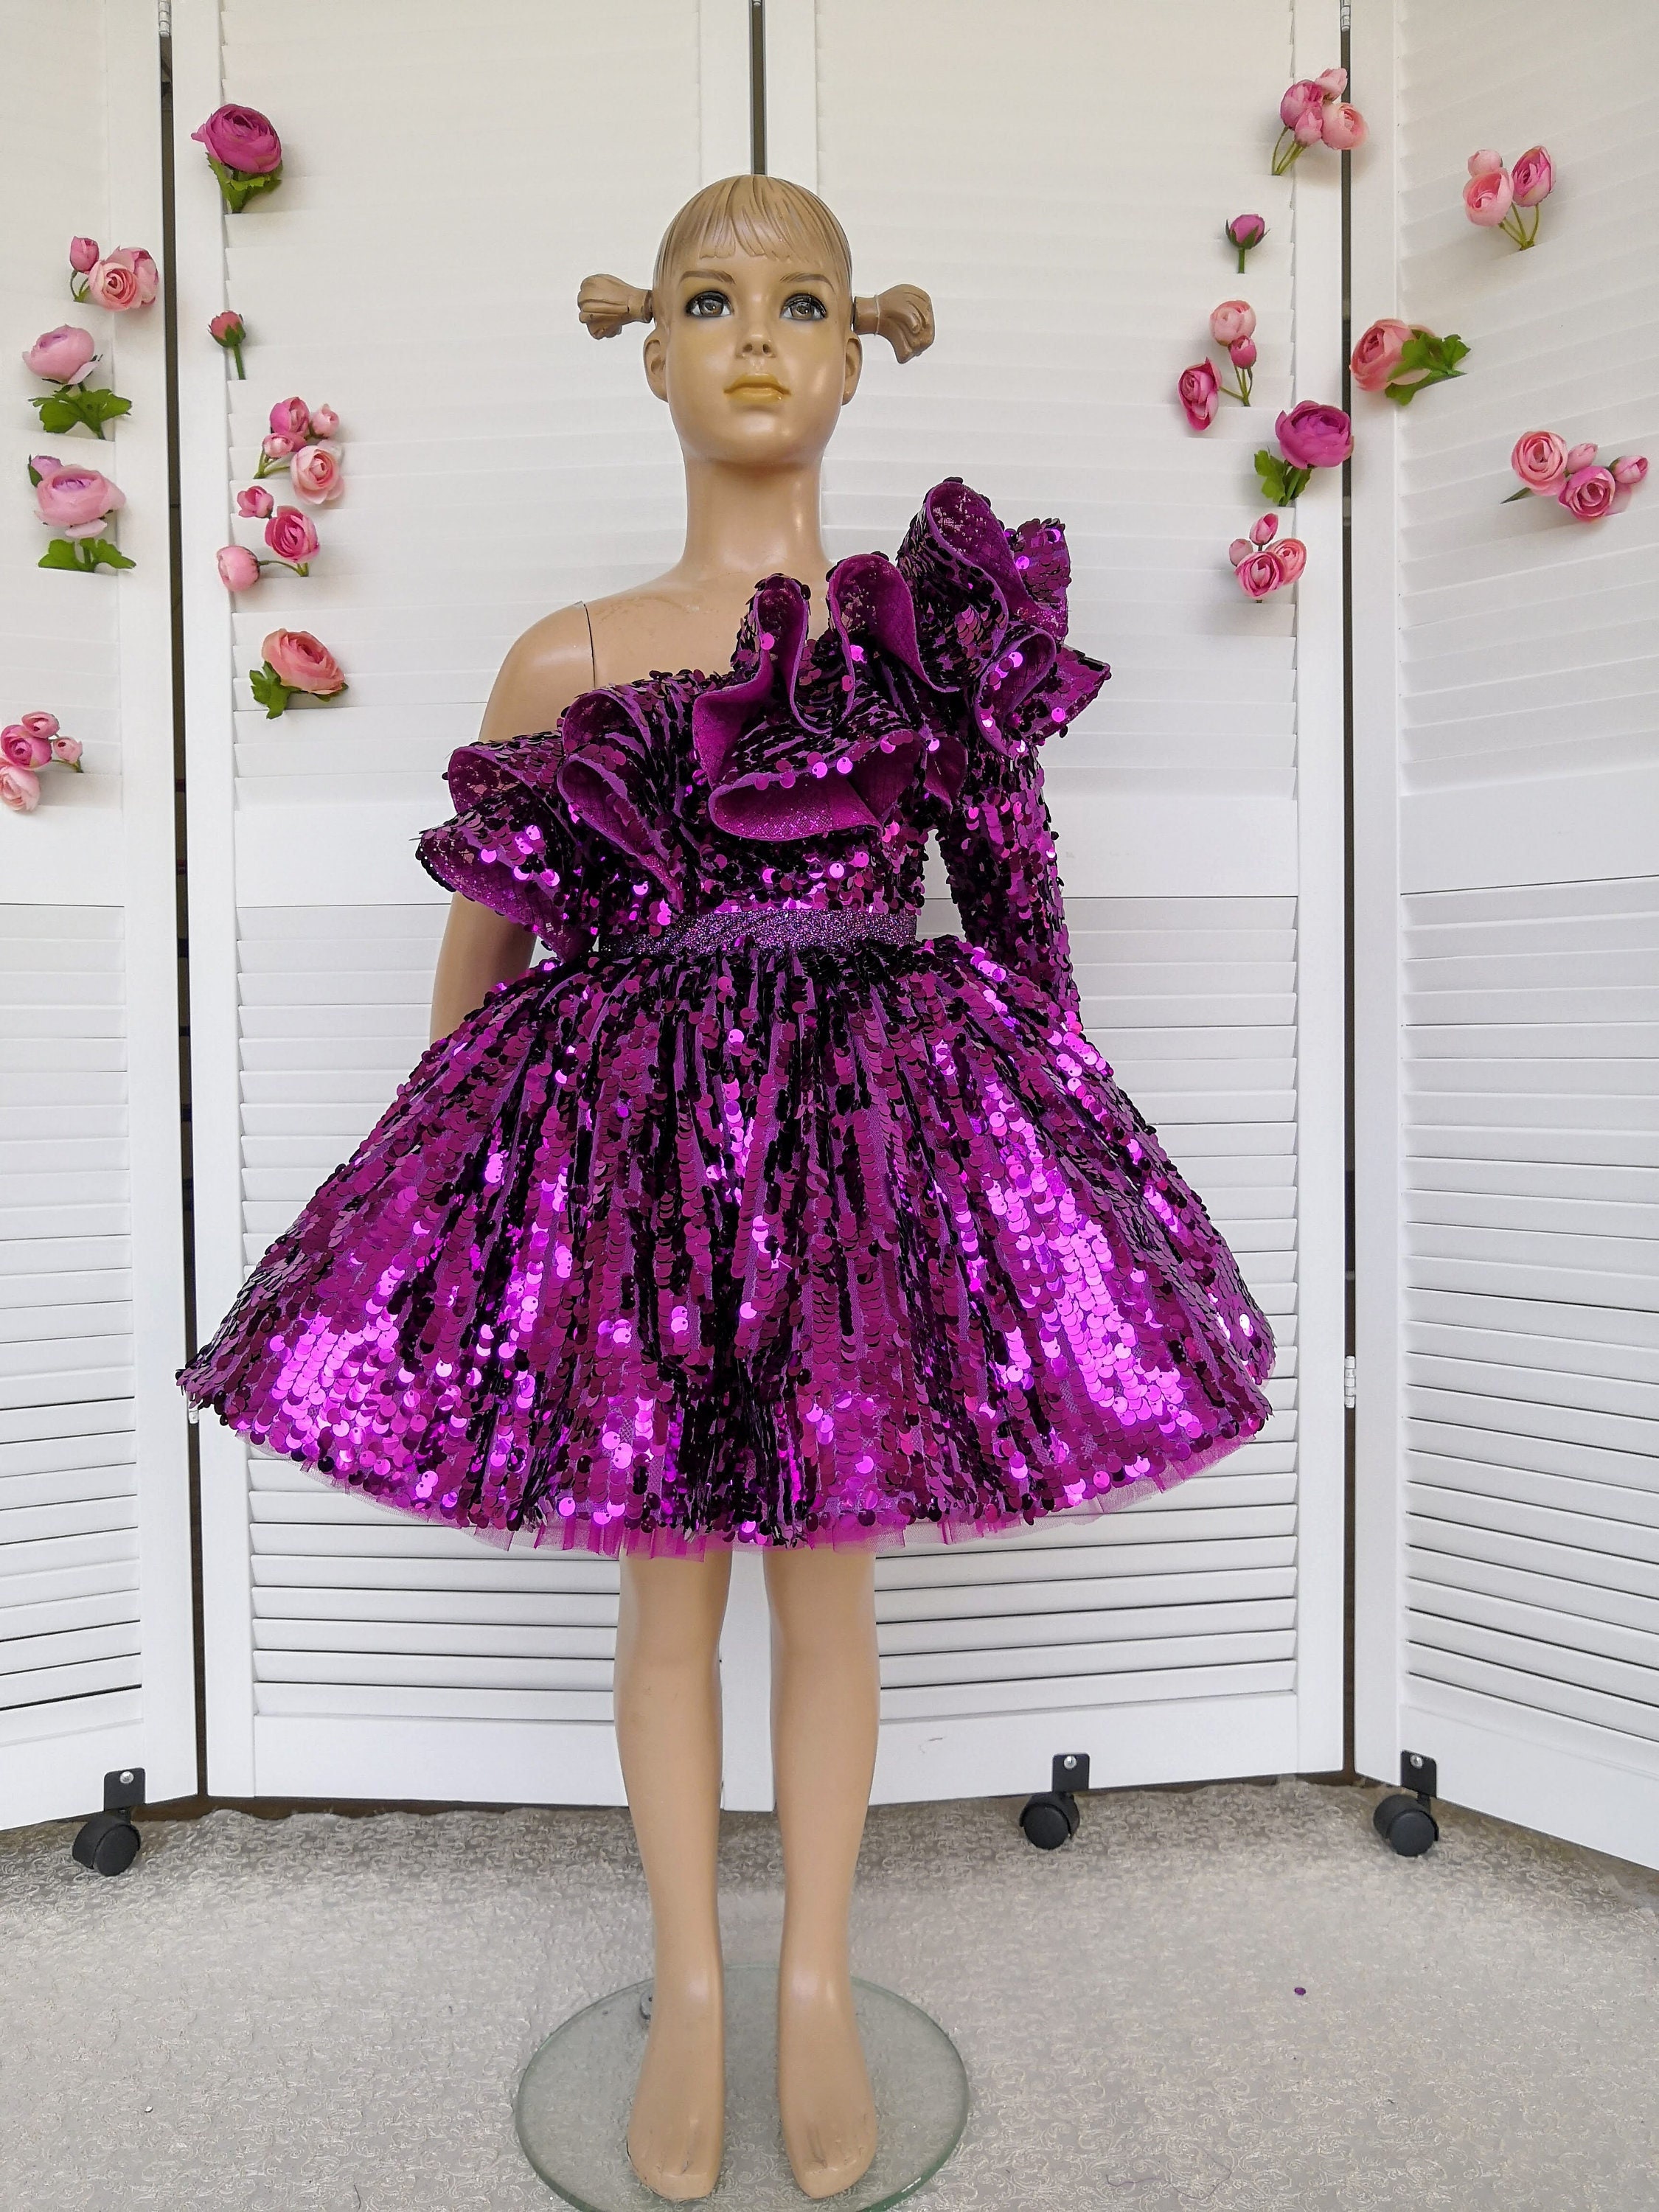 Robe de fille de fleur brillante violette, robe scintillante pour